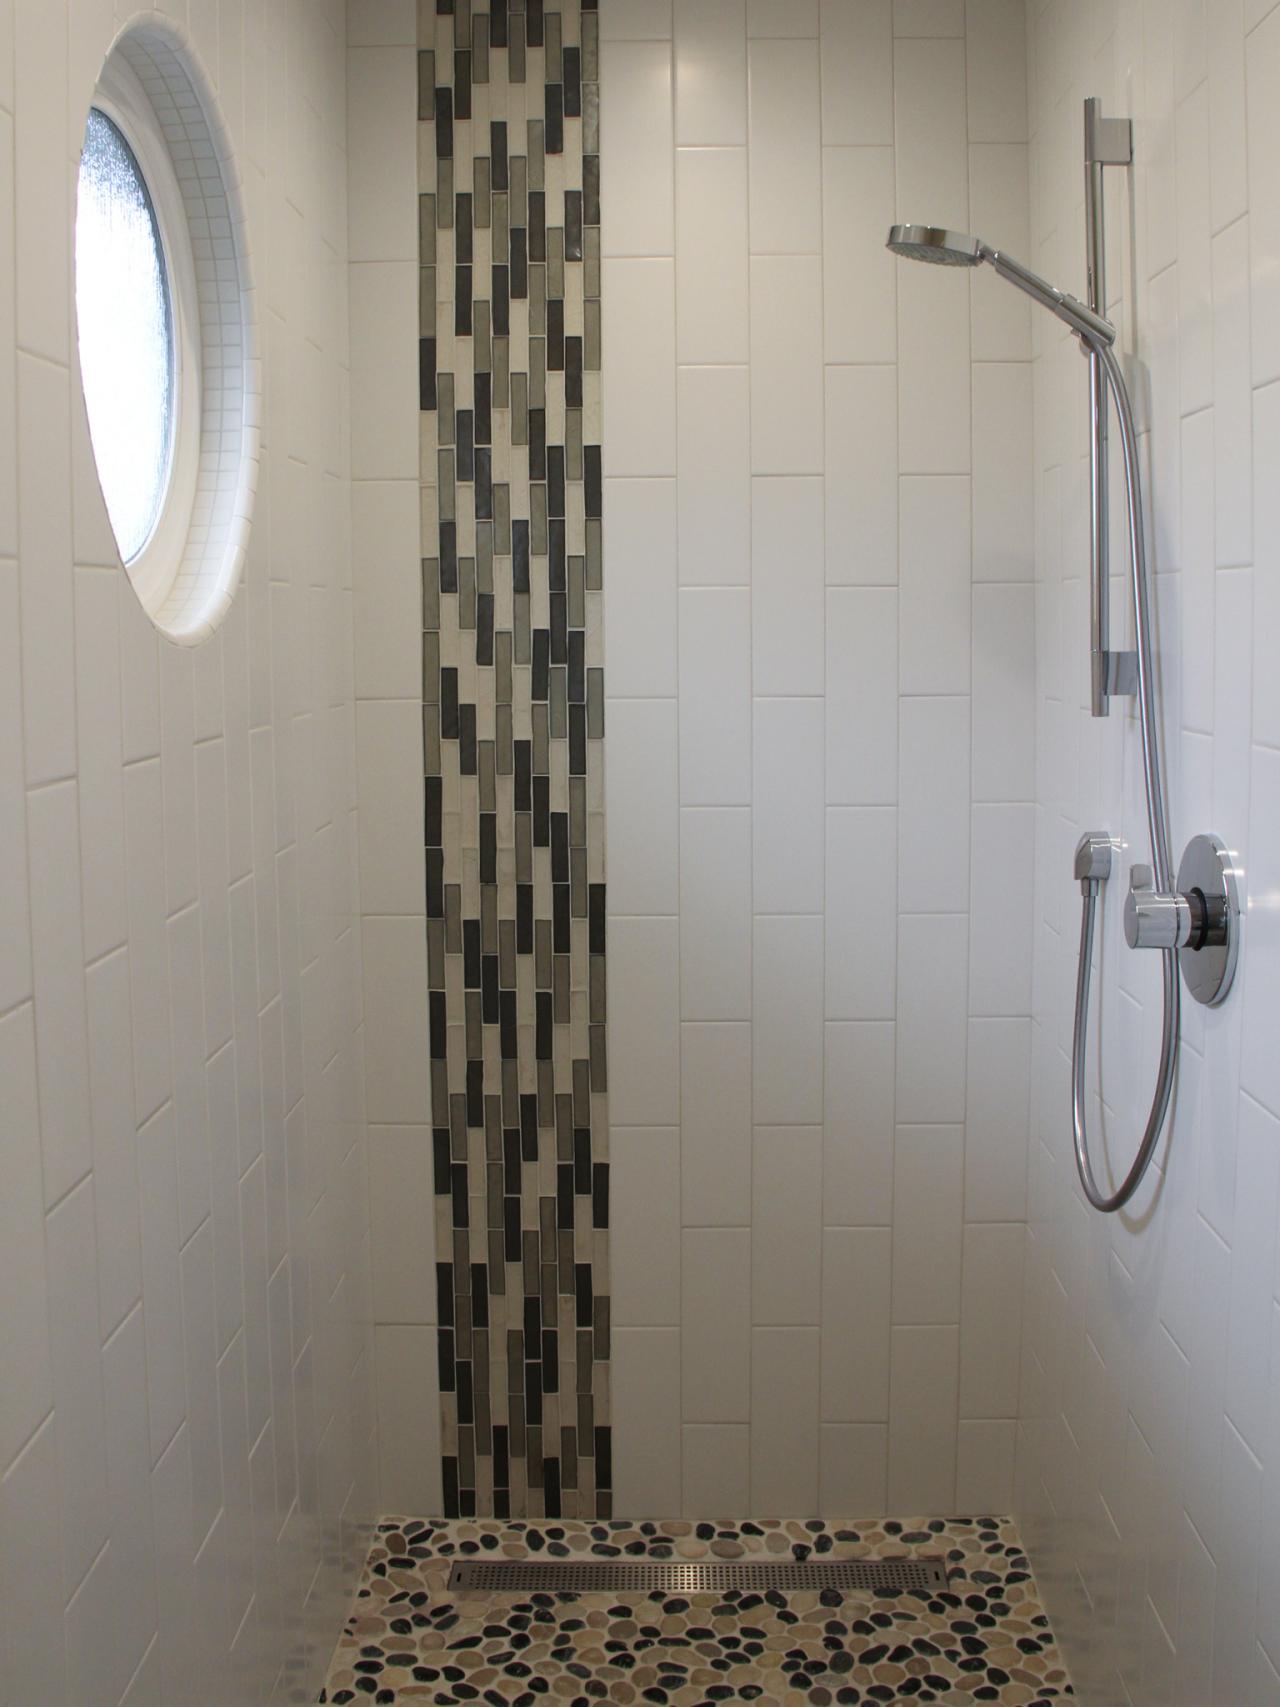 bathroom designs using glass tiles photo - 10